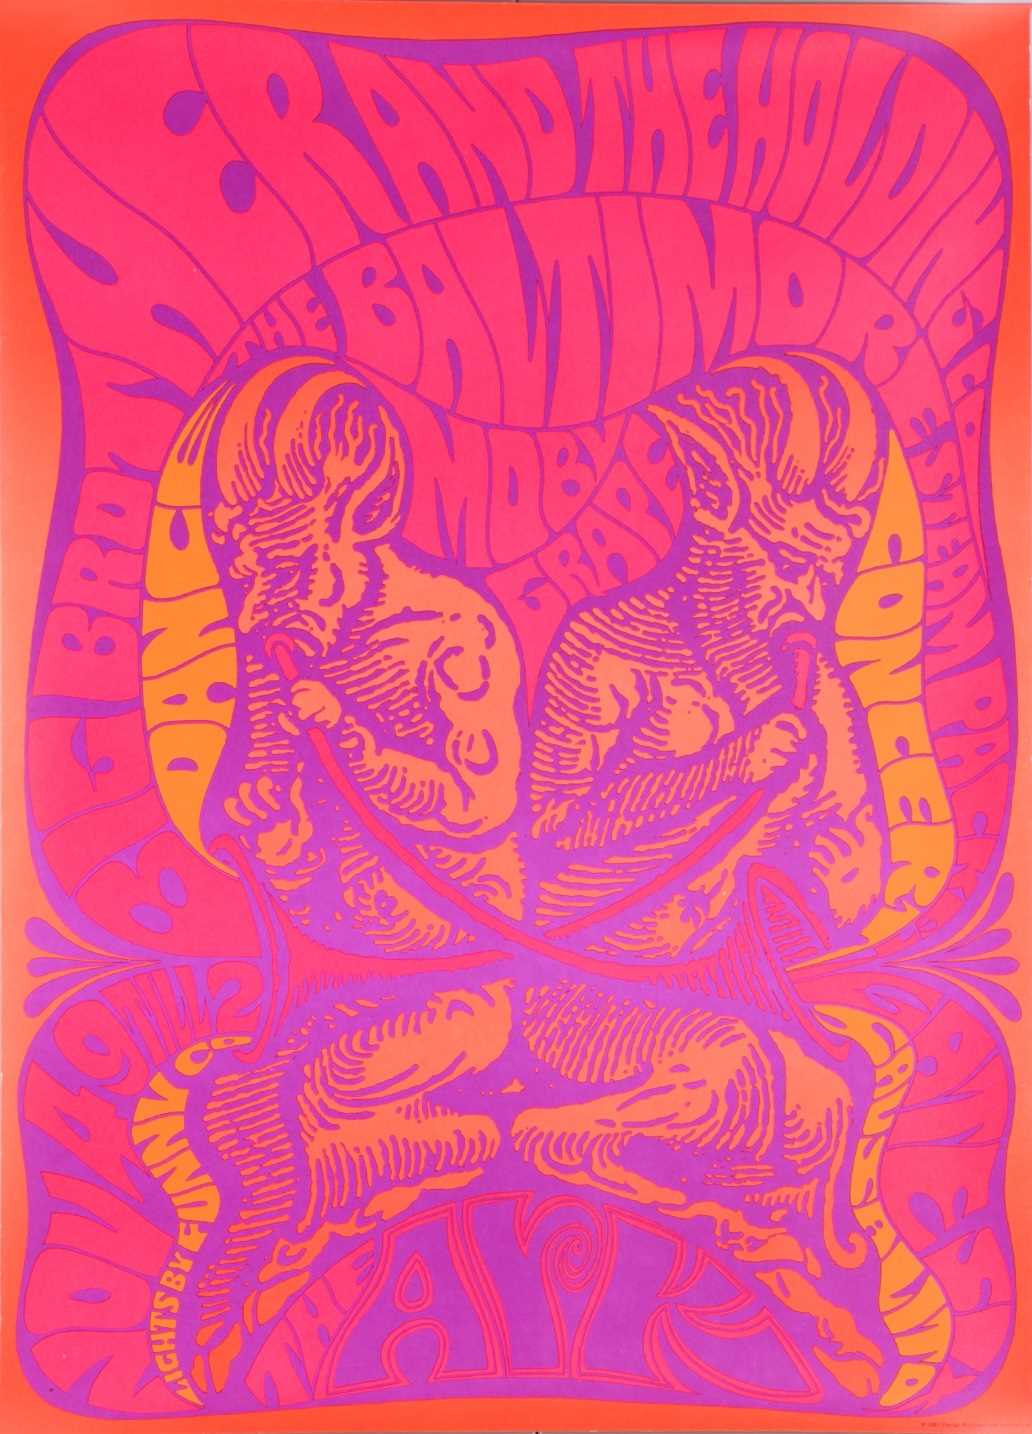 Lot 2 - An original 1967 San Francisco psychedelic...